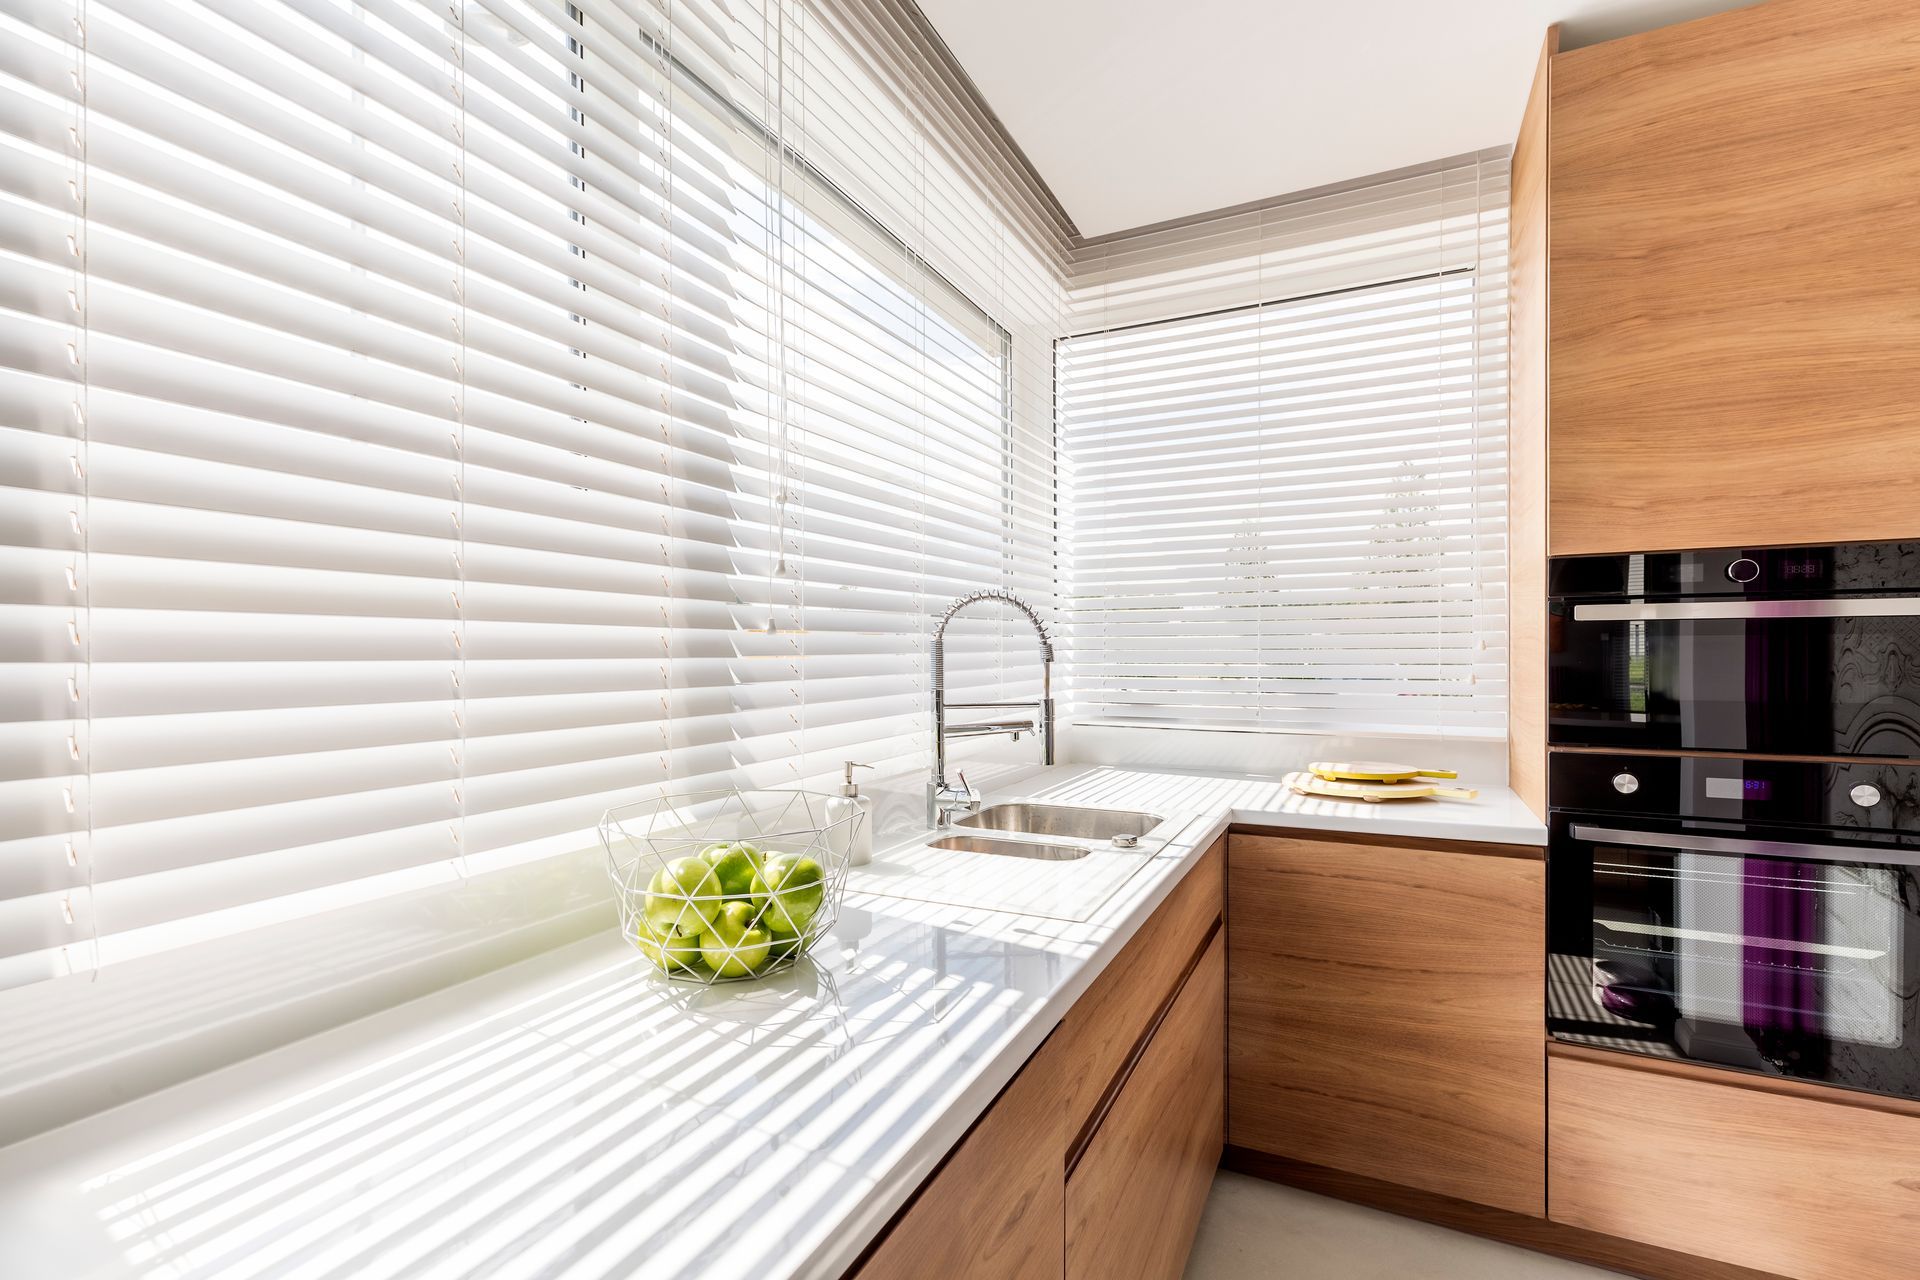 window blinds in a modern kitchen